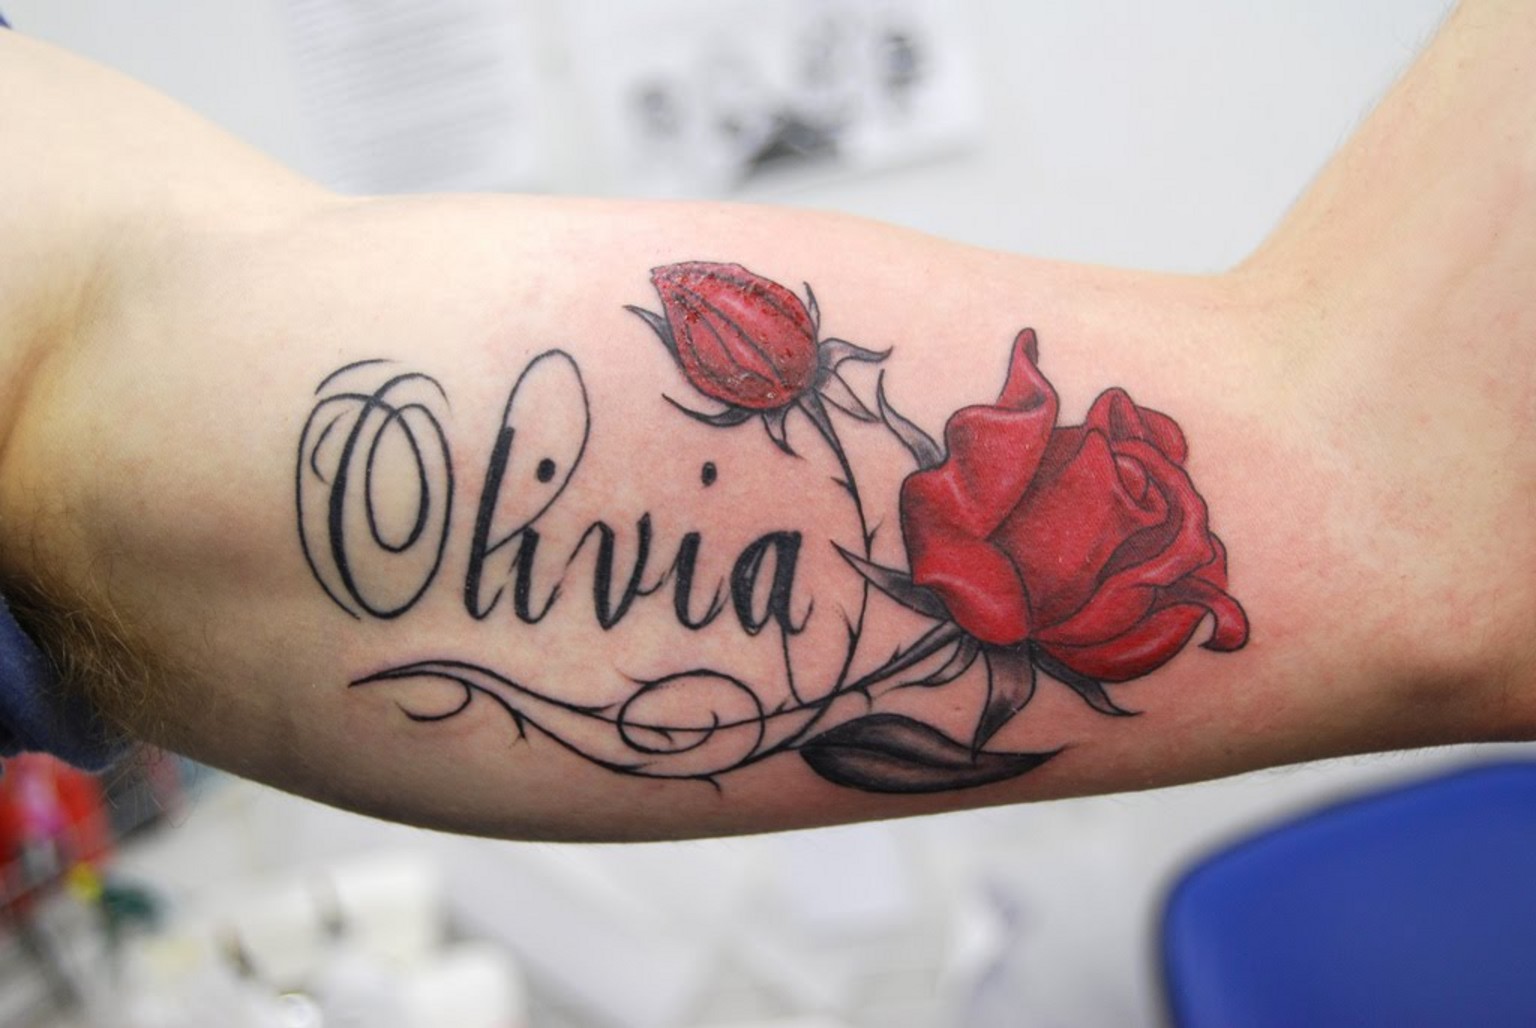 Name Tattoos On Wrist - wide 7